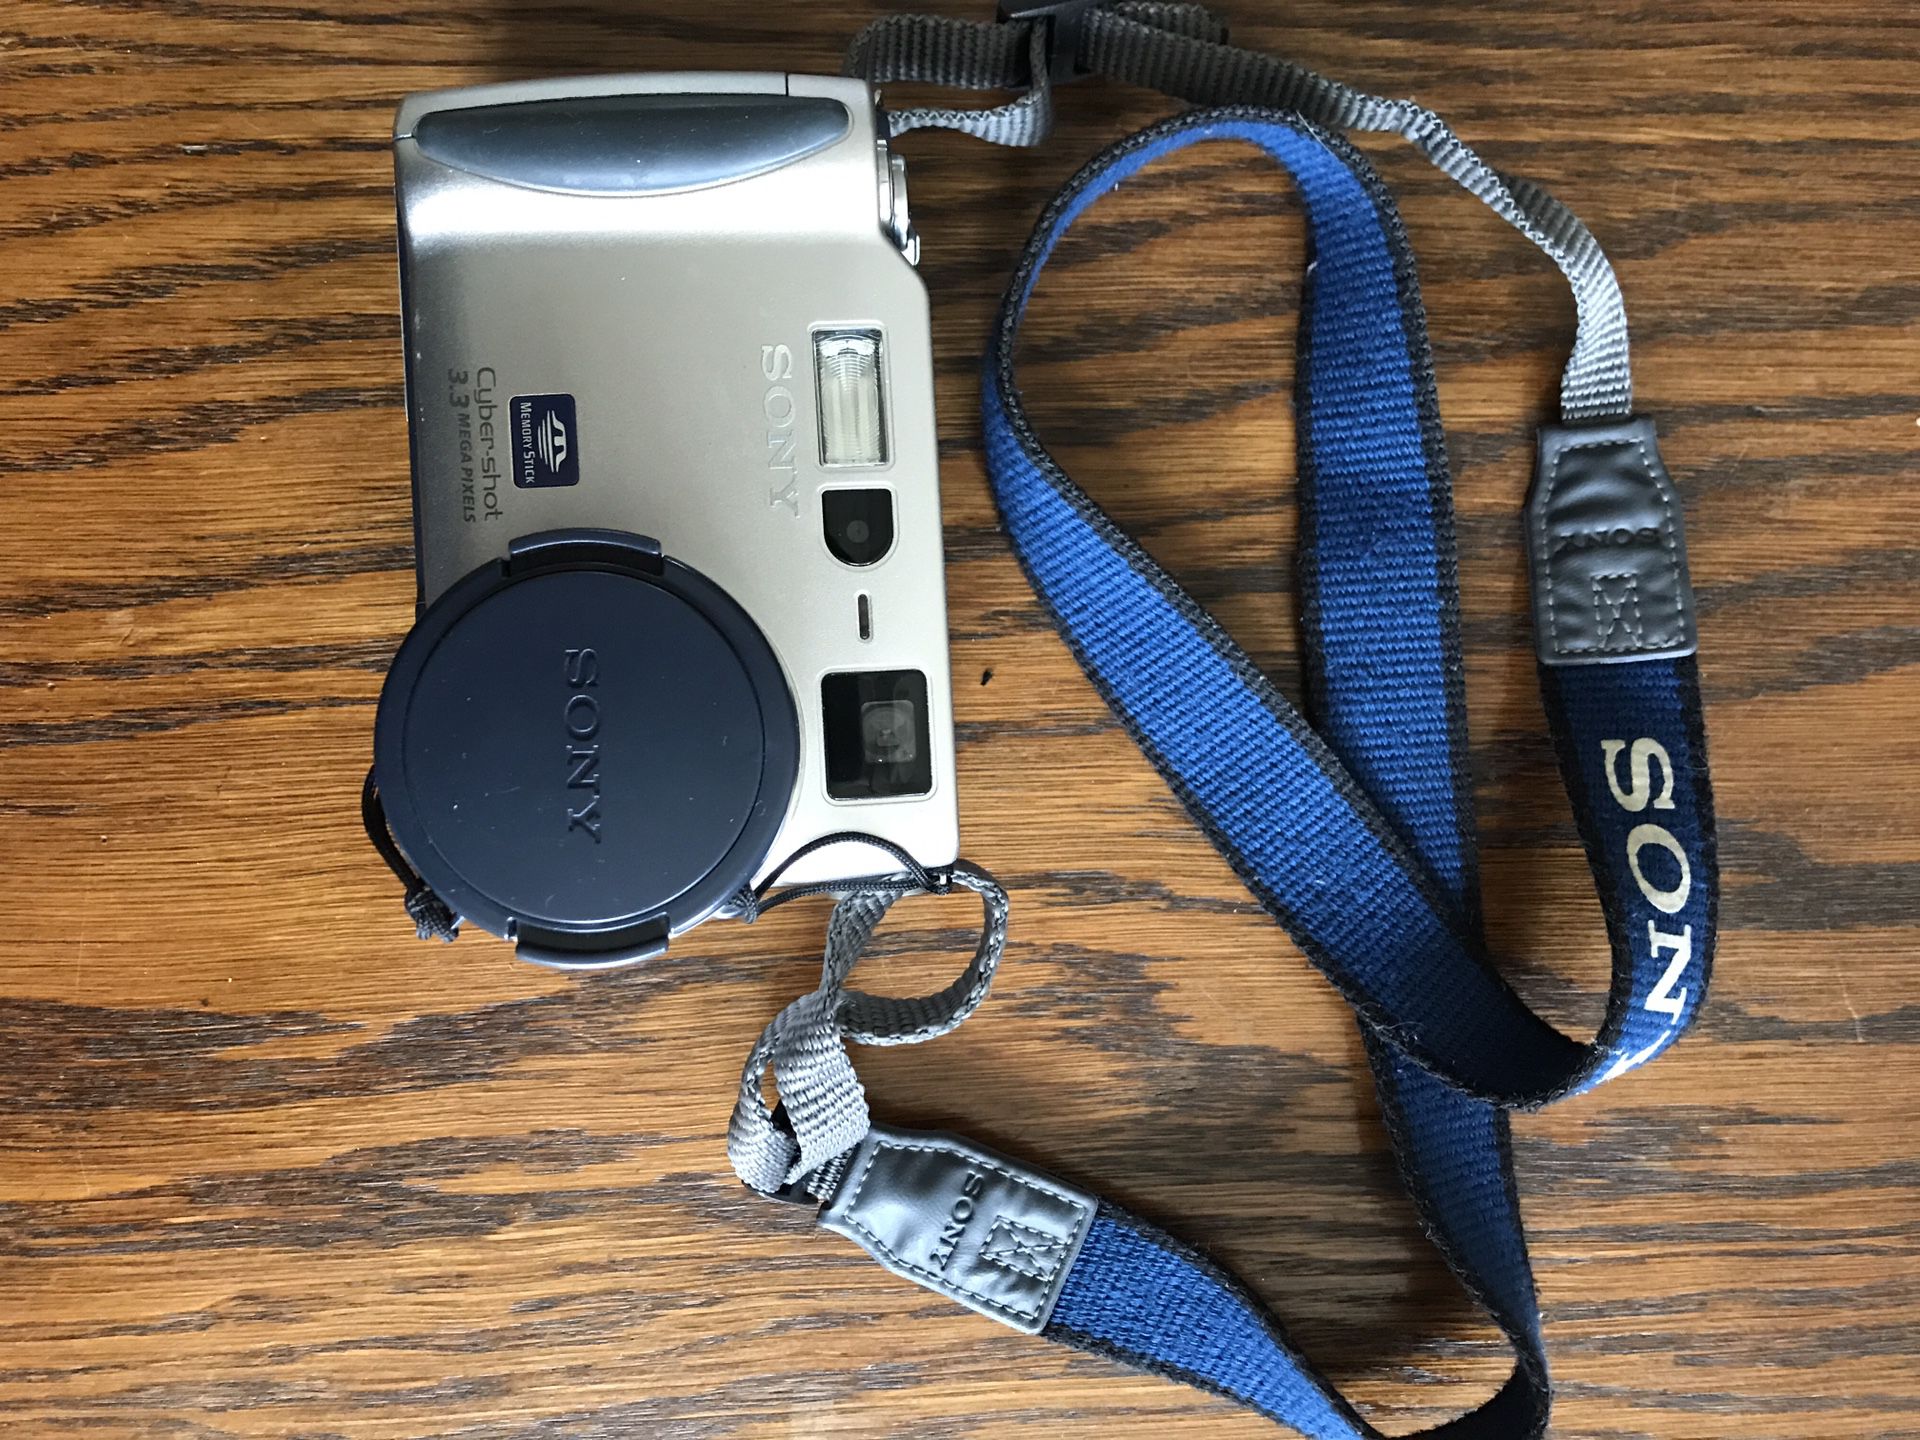 Sony Digital Camera and Bag